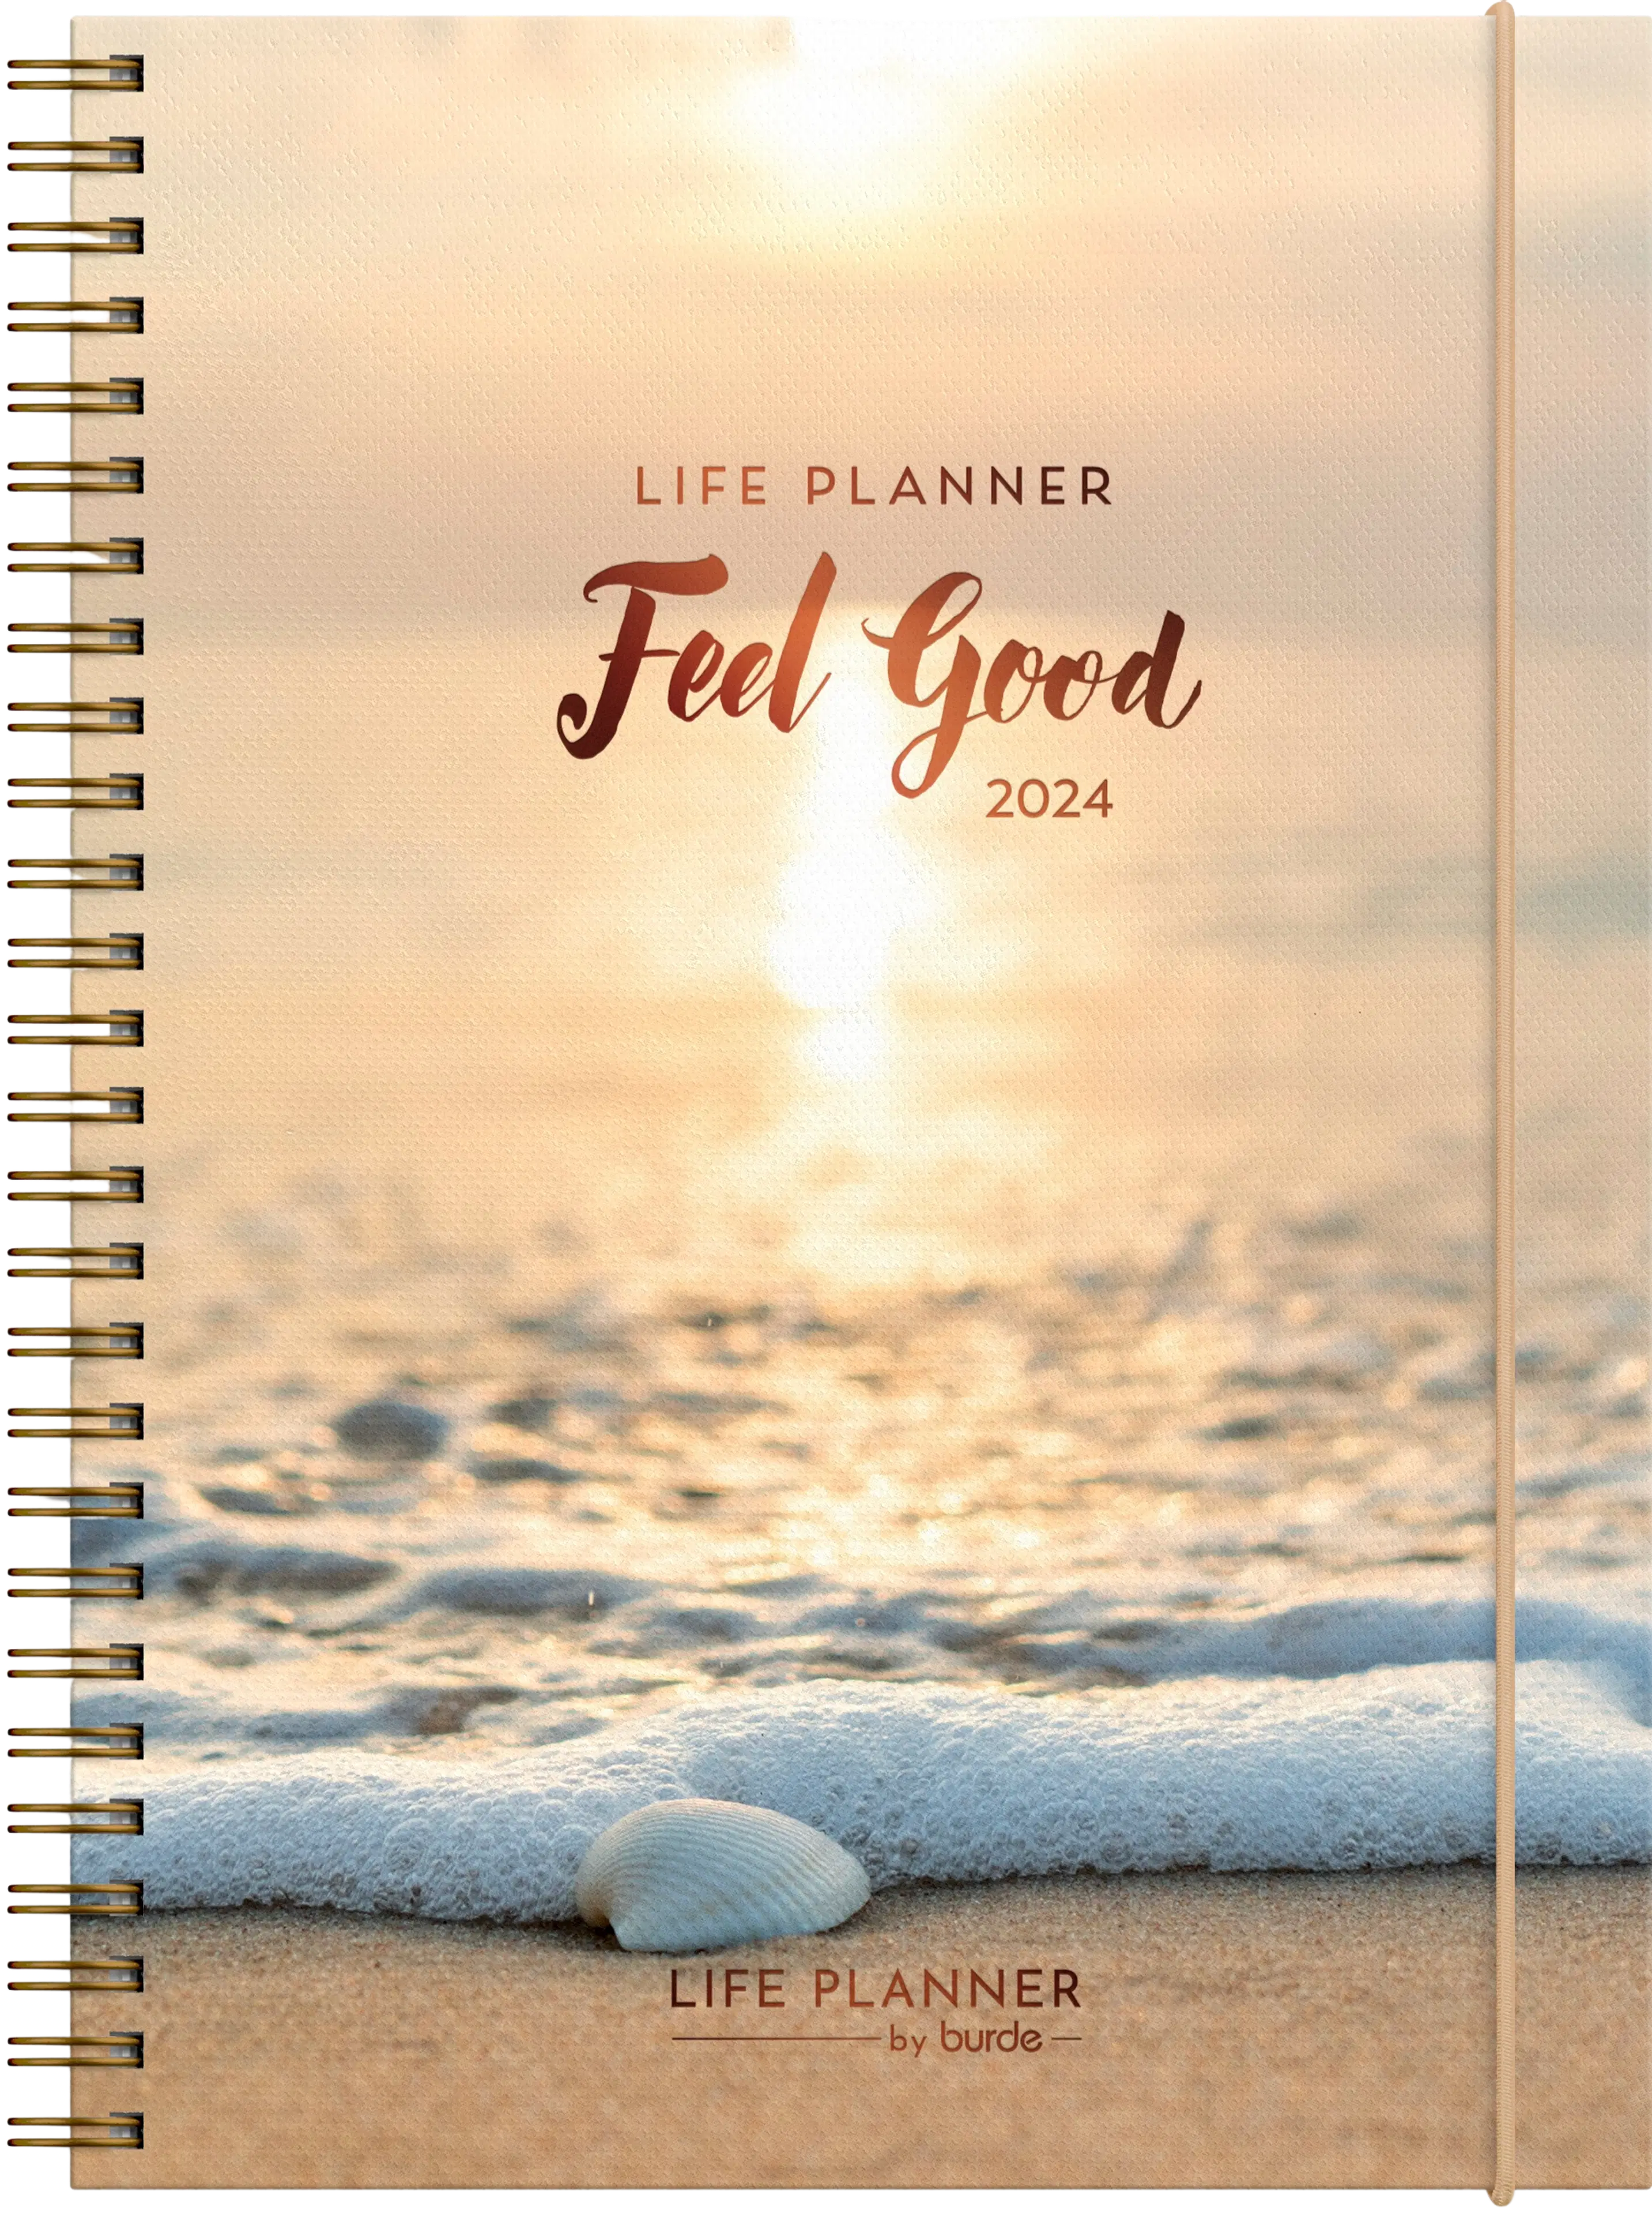 Burde kalenteri 2024 Life Planner Feel good